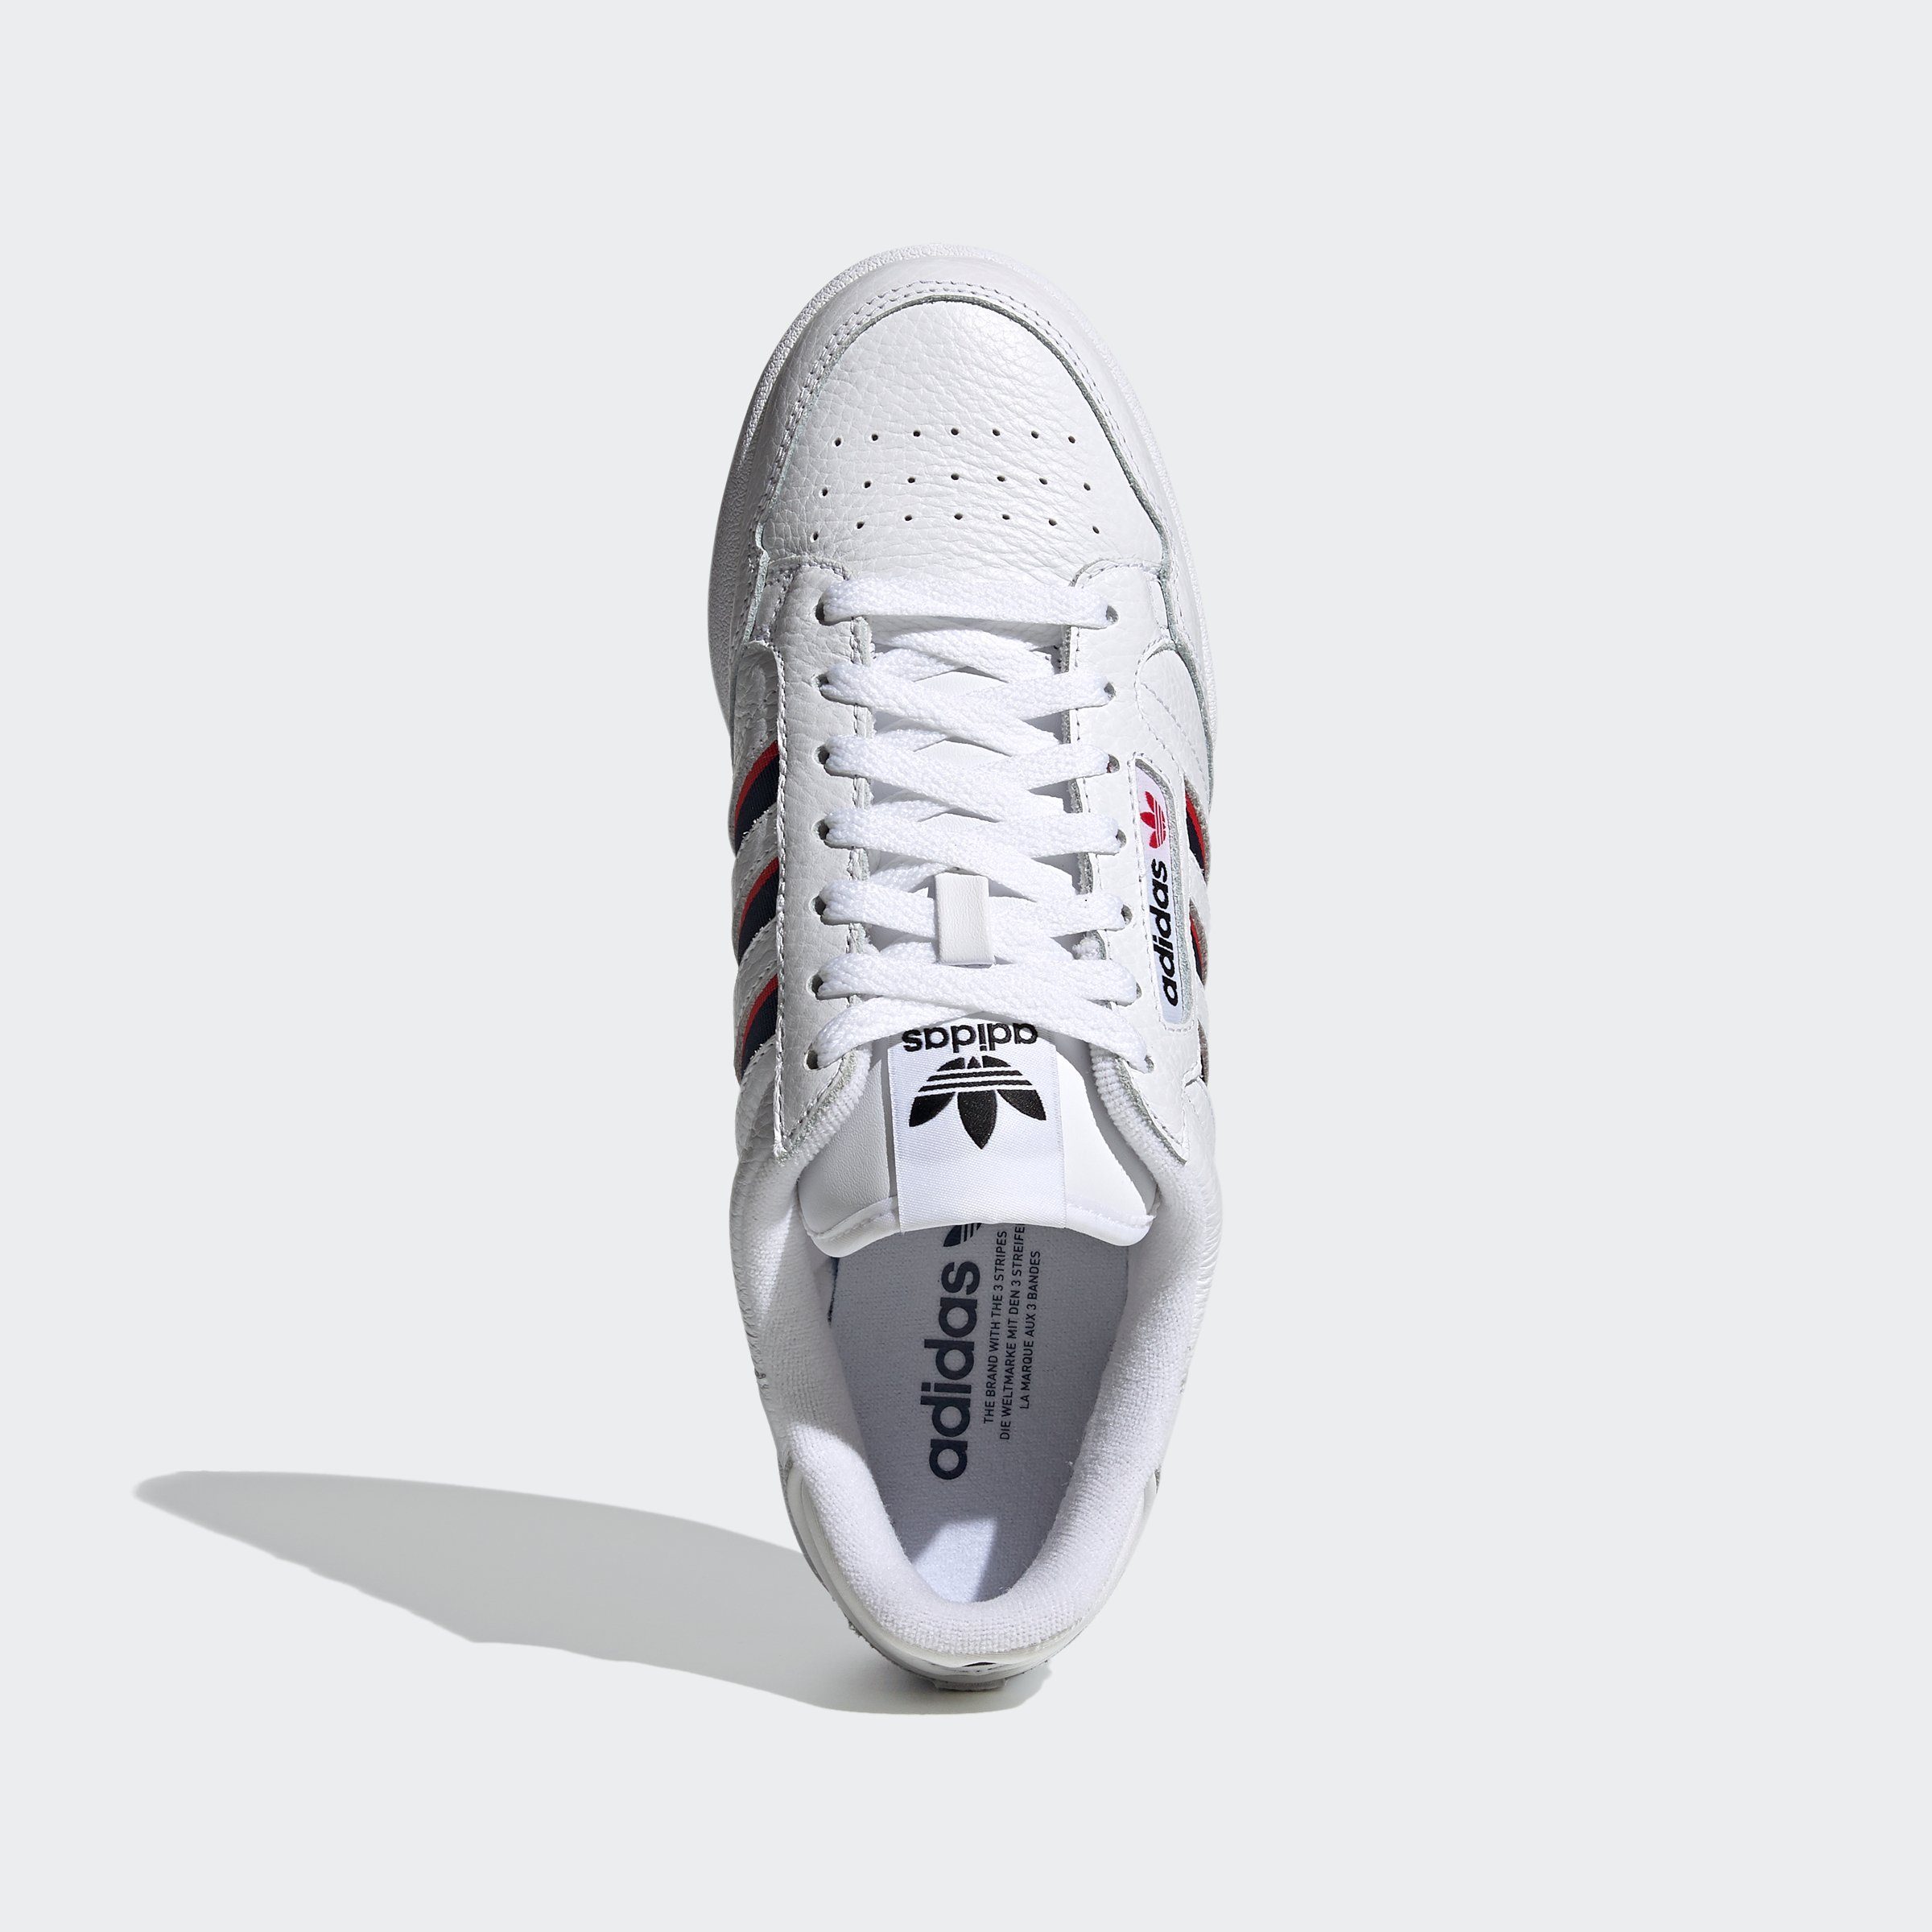 adidas Originals CONTINENTAL 80 STRIPES Sneaker FTWWHT-CONAVY-VIVRED